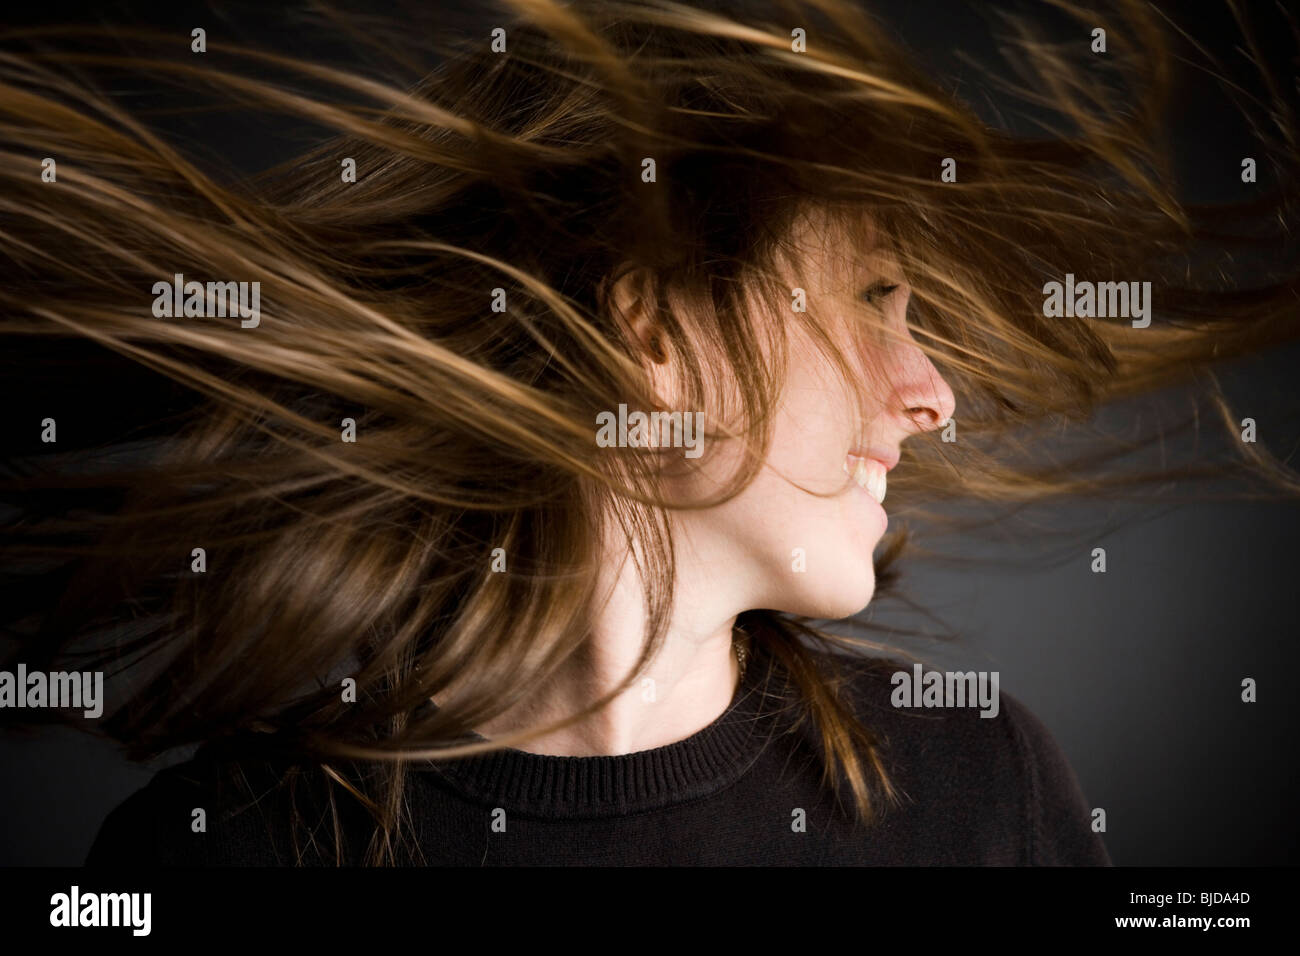 Woman flipping hair Stock Photo - Alamy